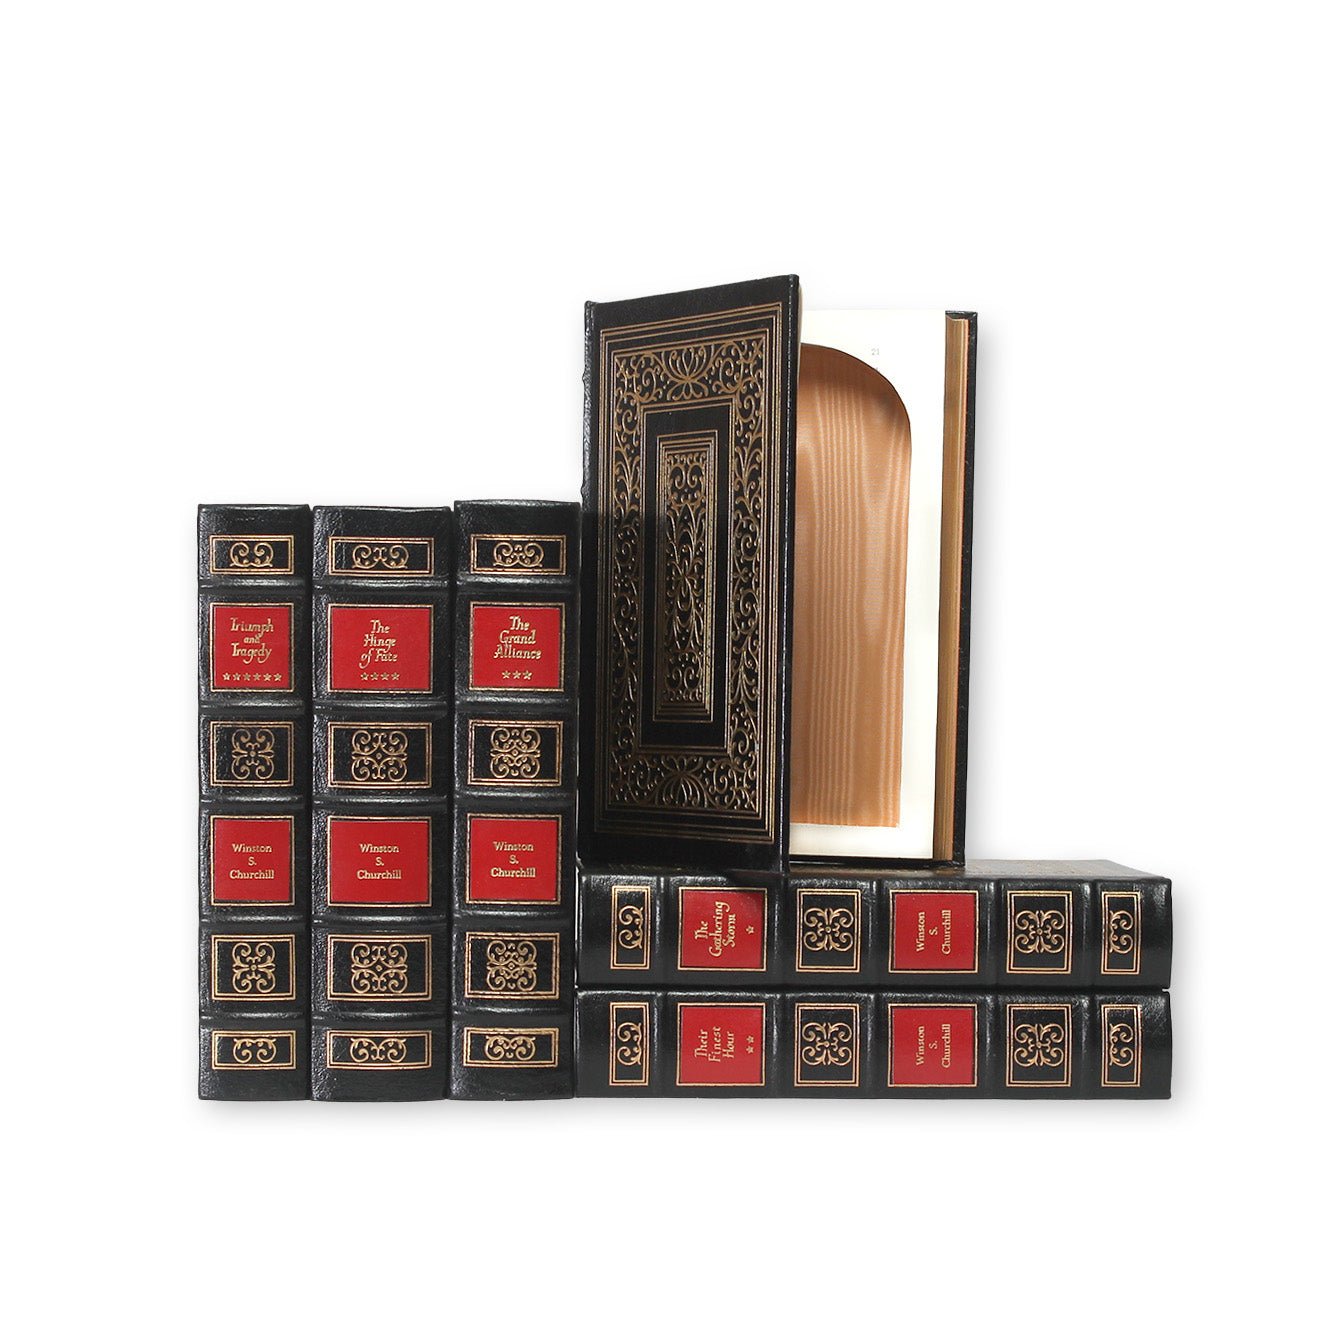 Winston Churchill's HIstory of WW2 Book Safes - You pick the title - Secret Storage Books